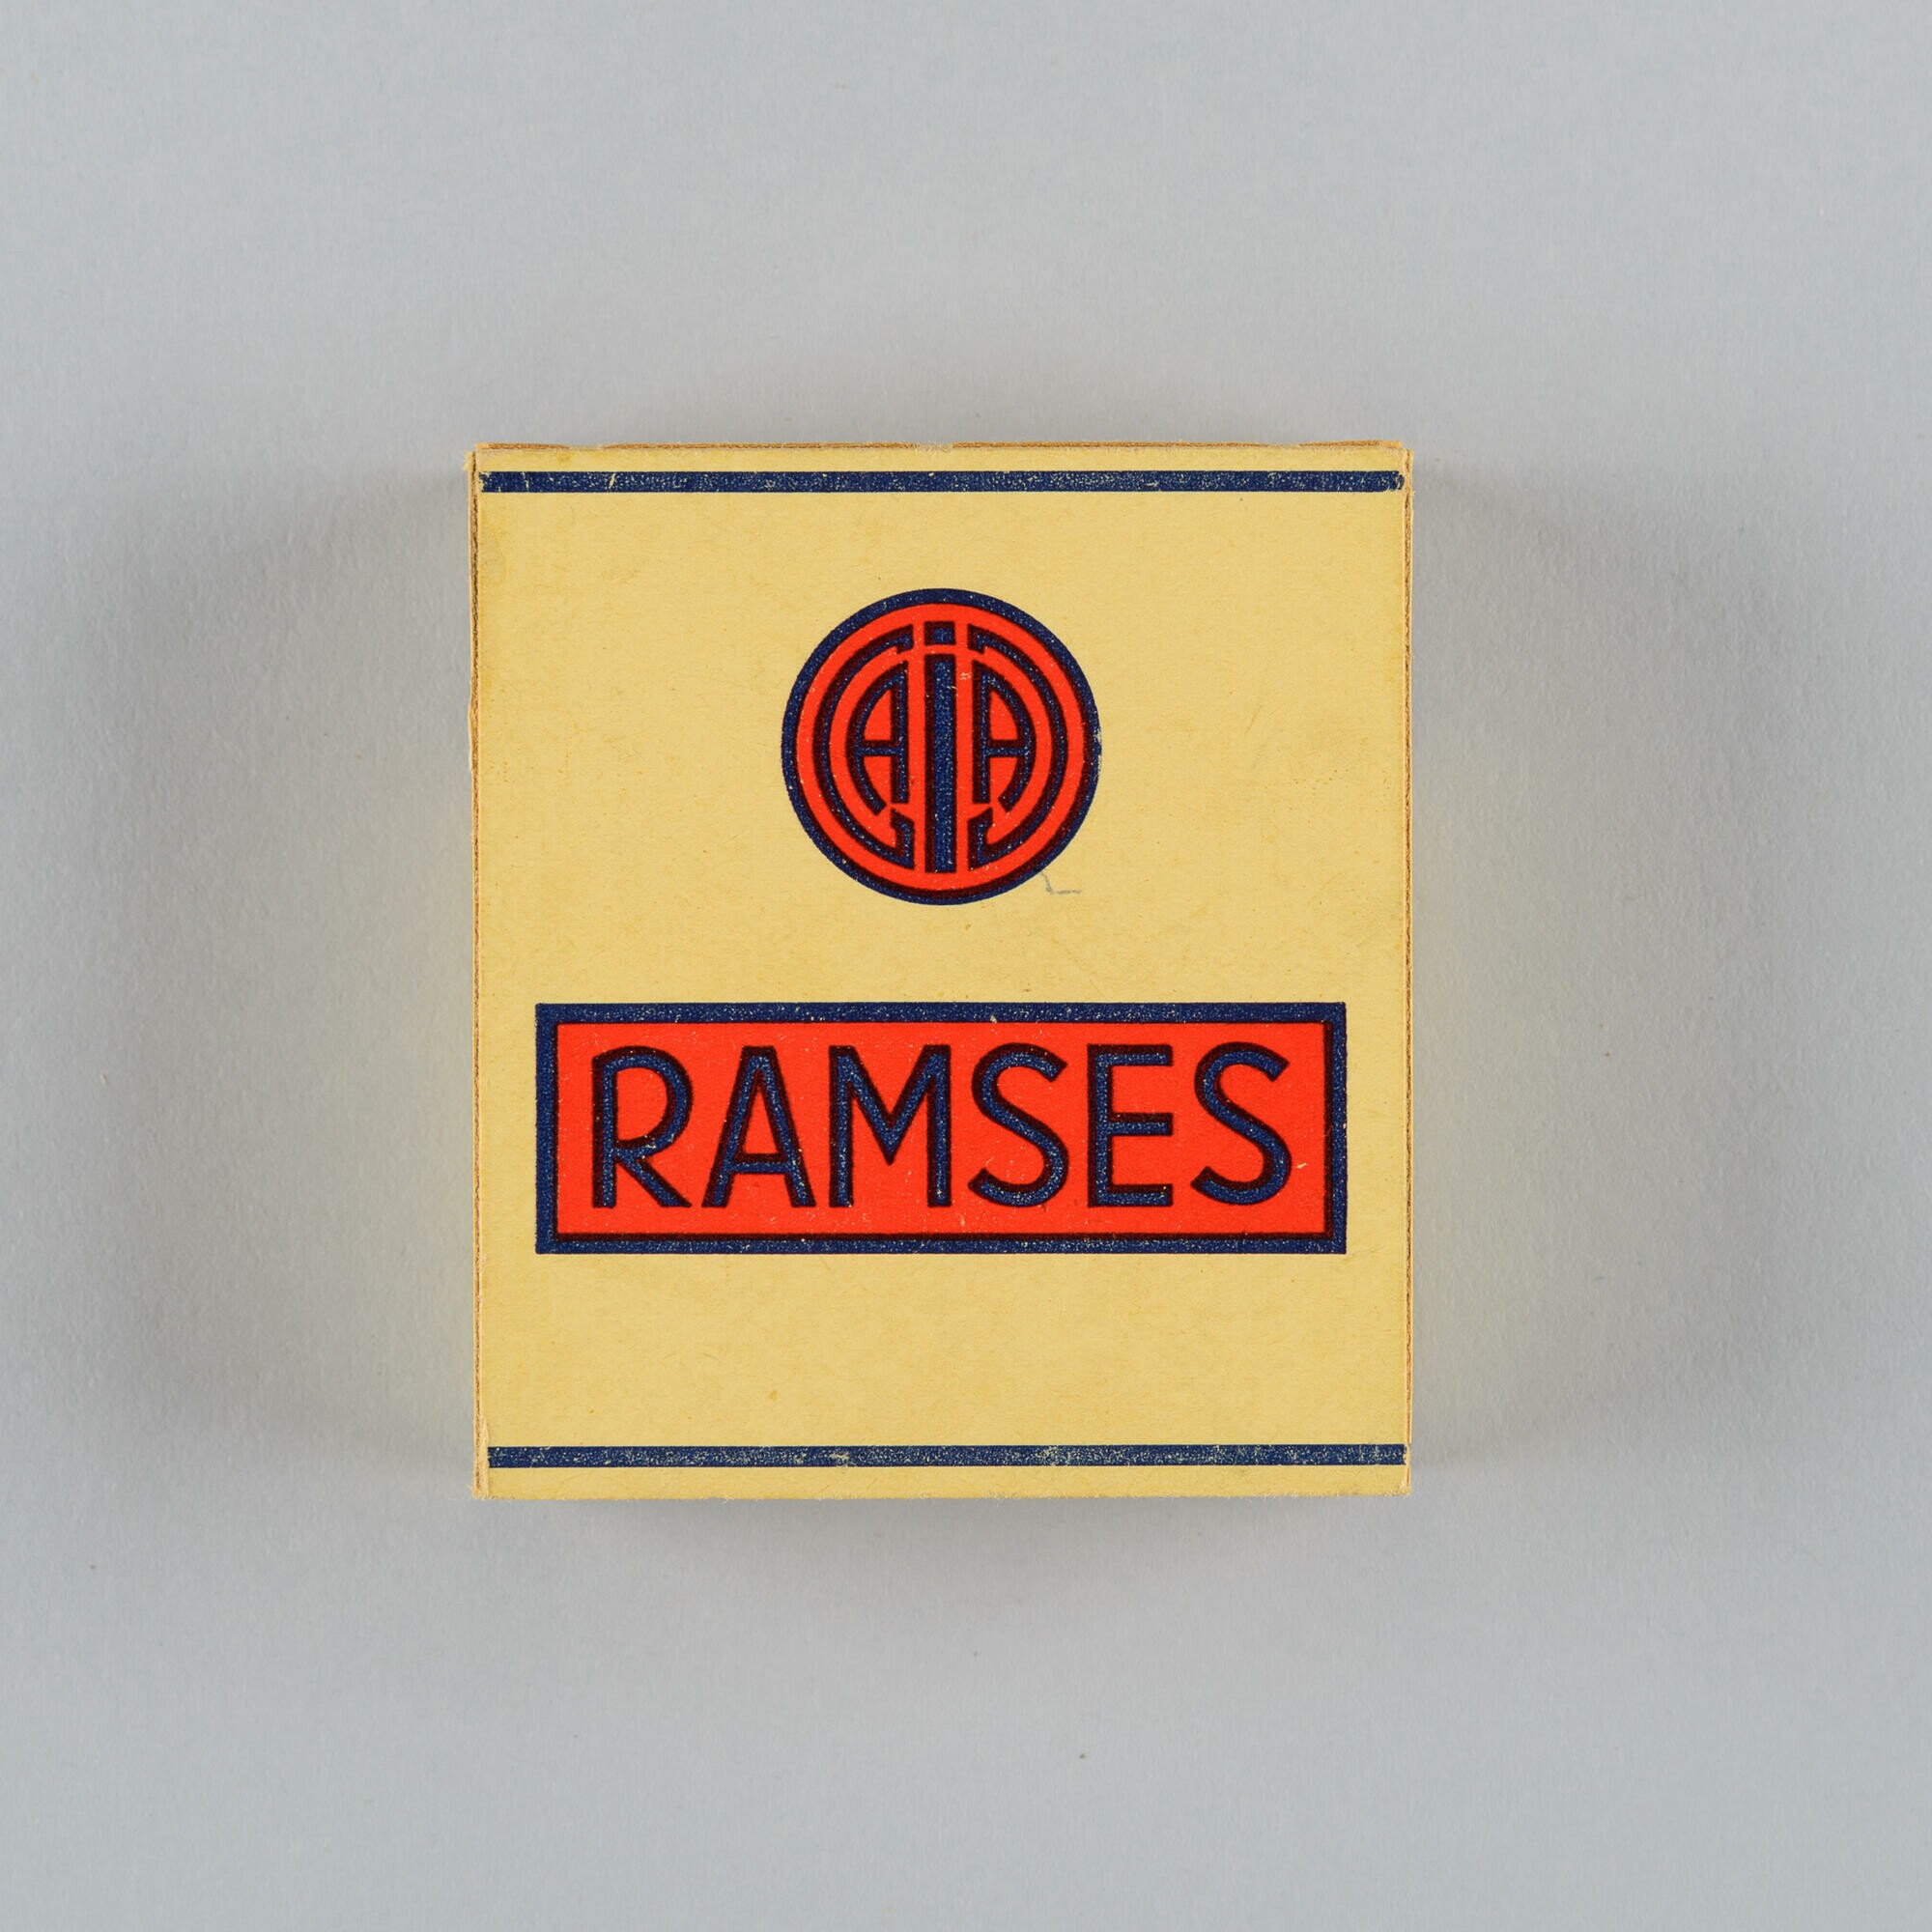 6 Zigarettenschachteln mit Zigaretten der Marke "Ramses" (Stadtmuseum Dresden CC BY-NC-ND)